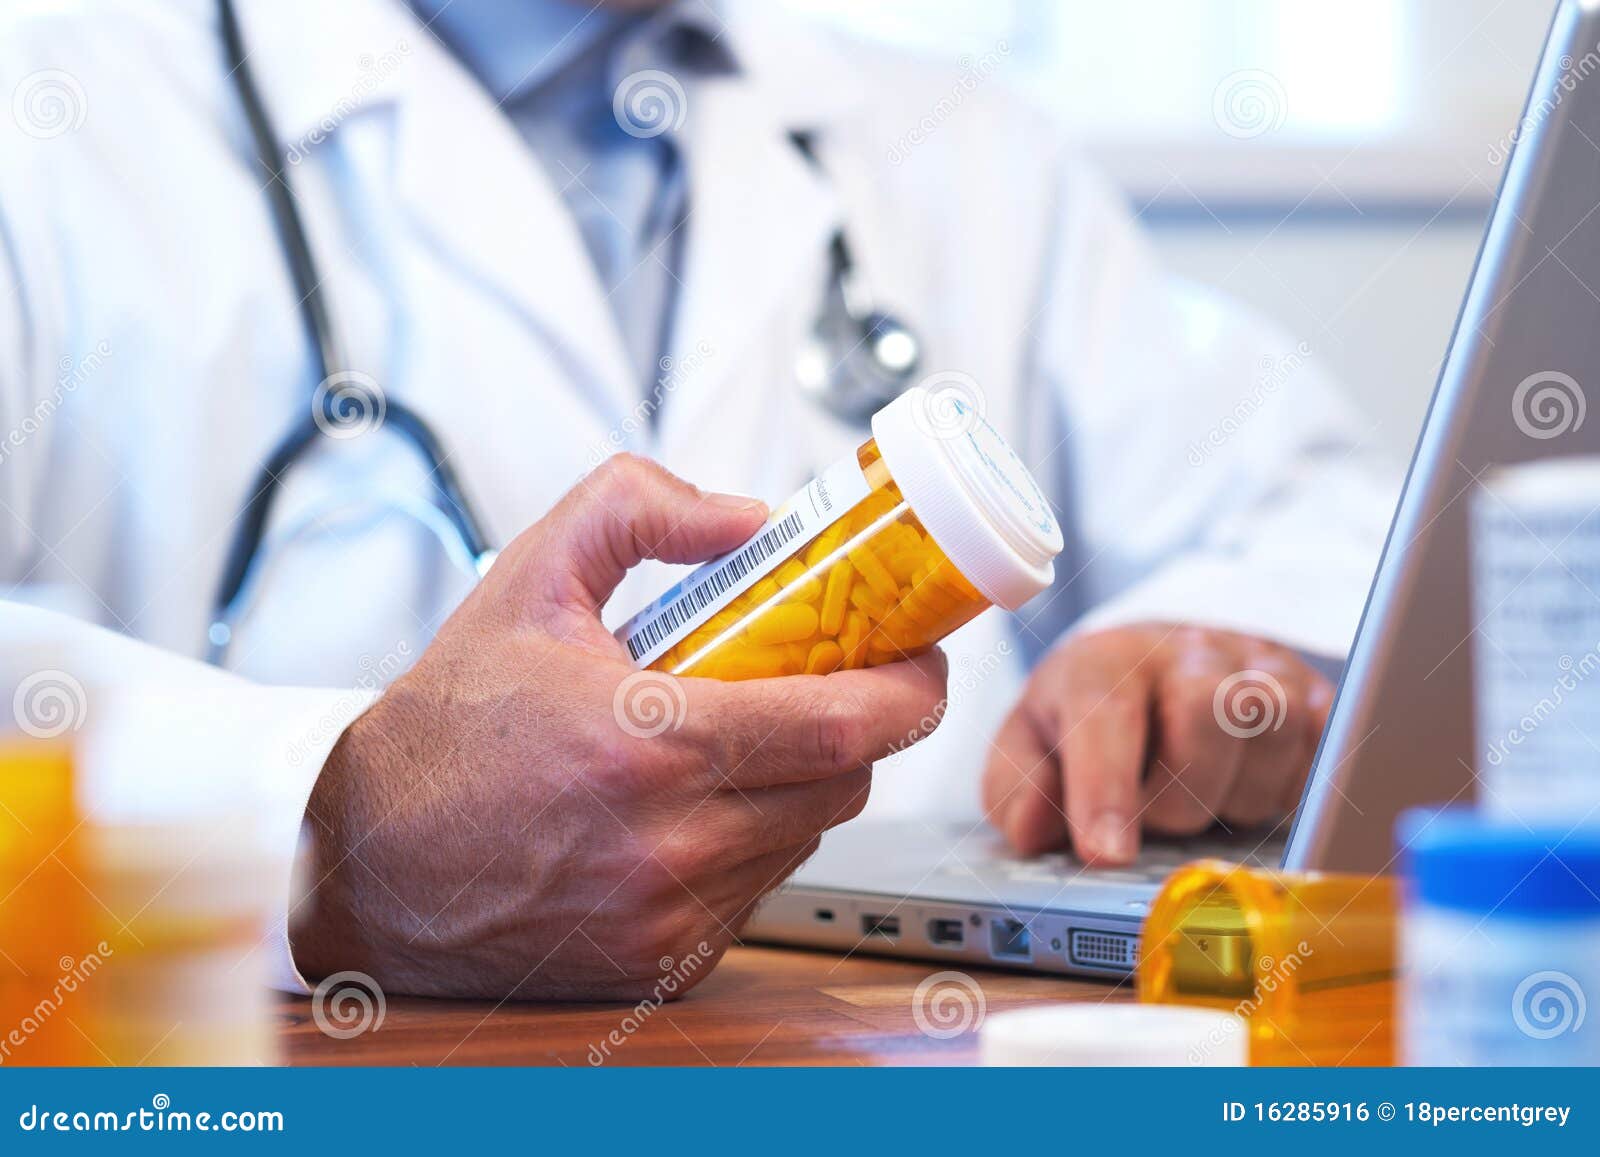 doctor preparing online internet prescription